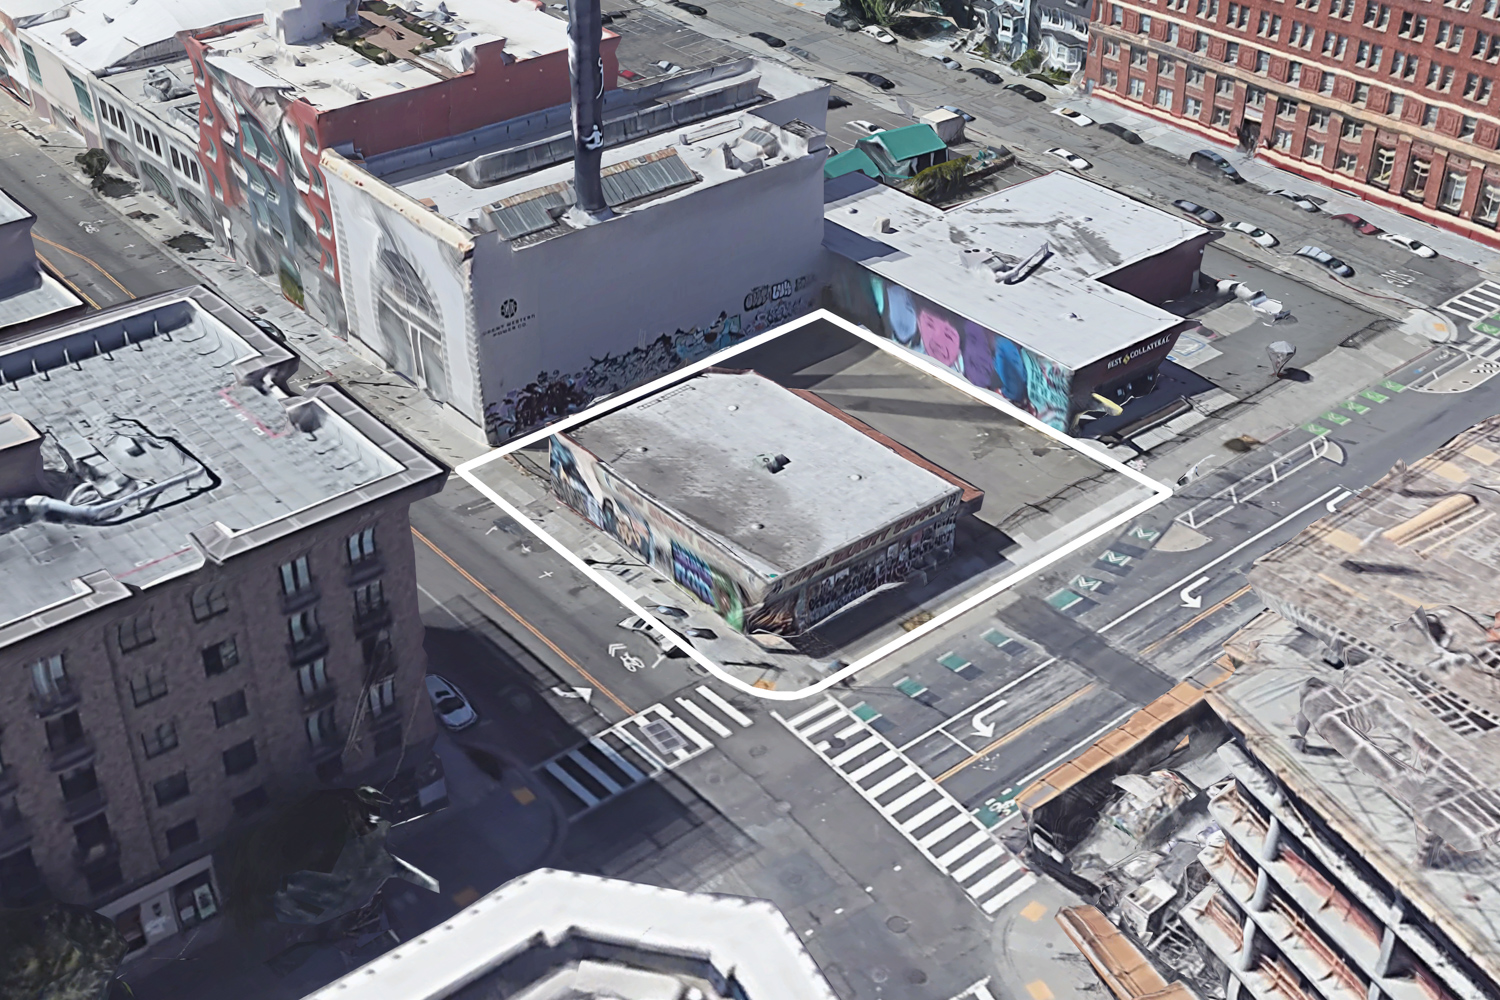 2015 Telegraph Avenue, image via Google Satellite